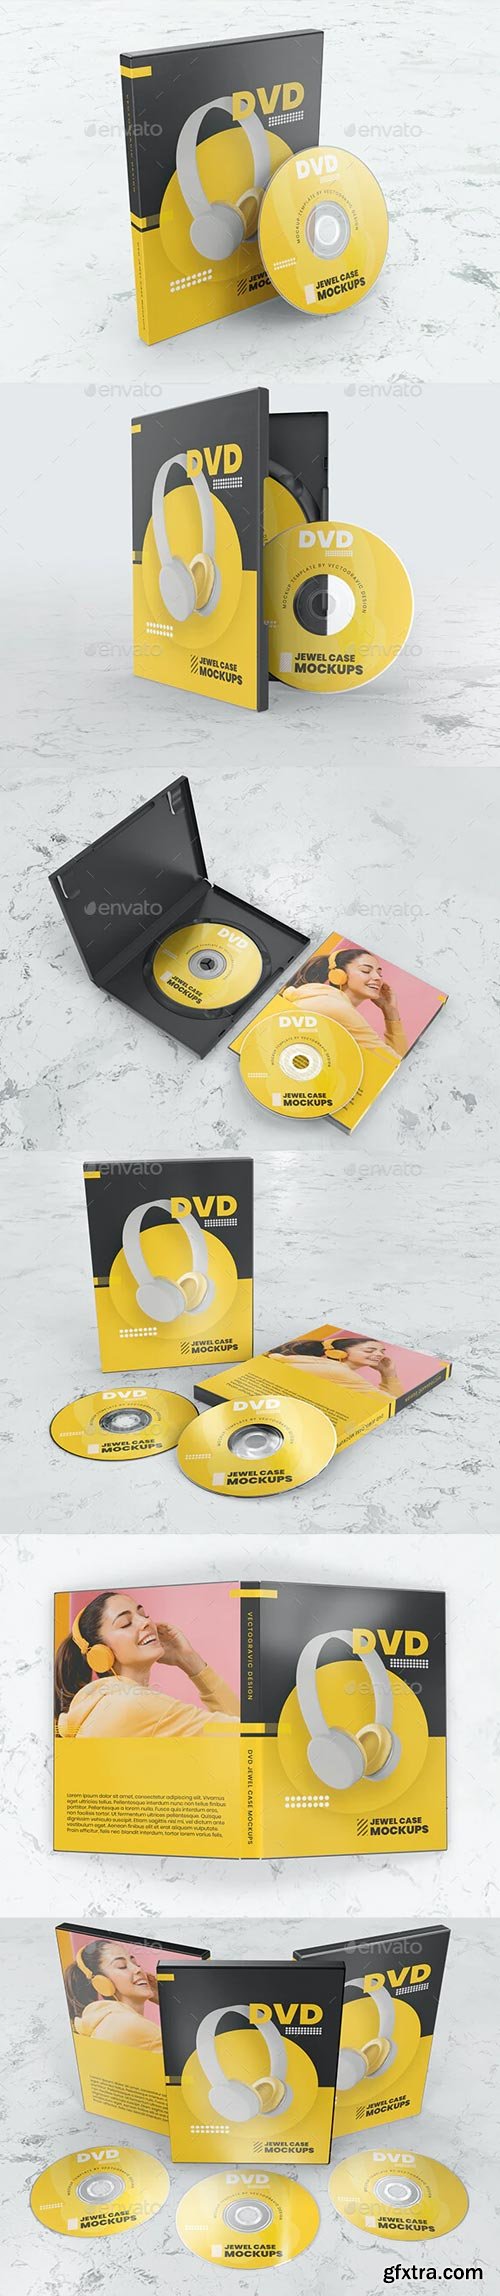 GraphicRiver - CD DVD Case Mockups - 29467191